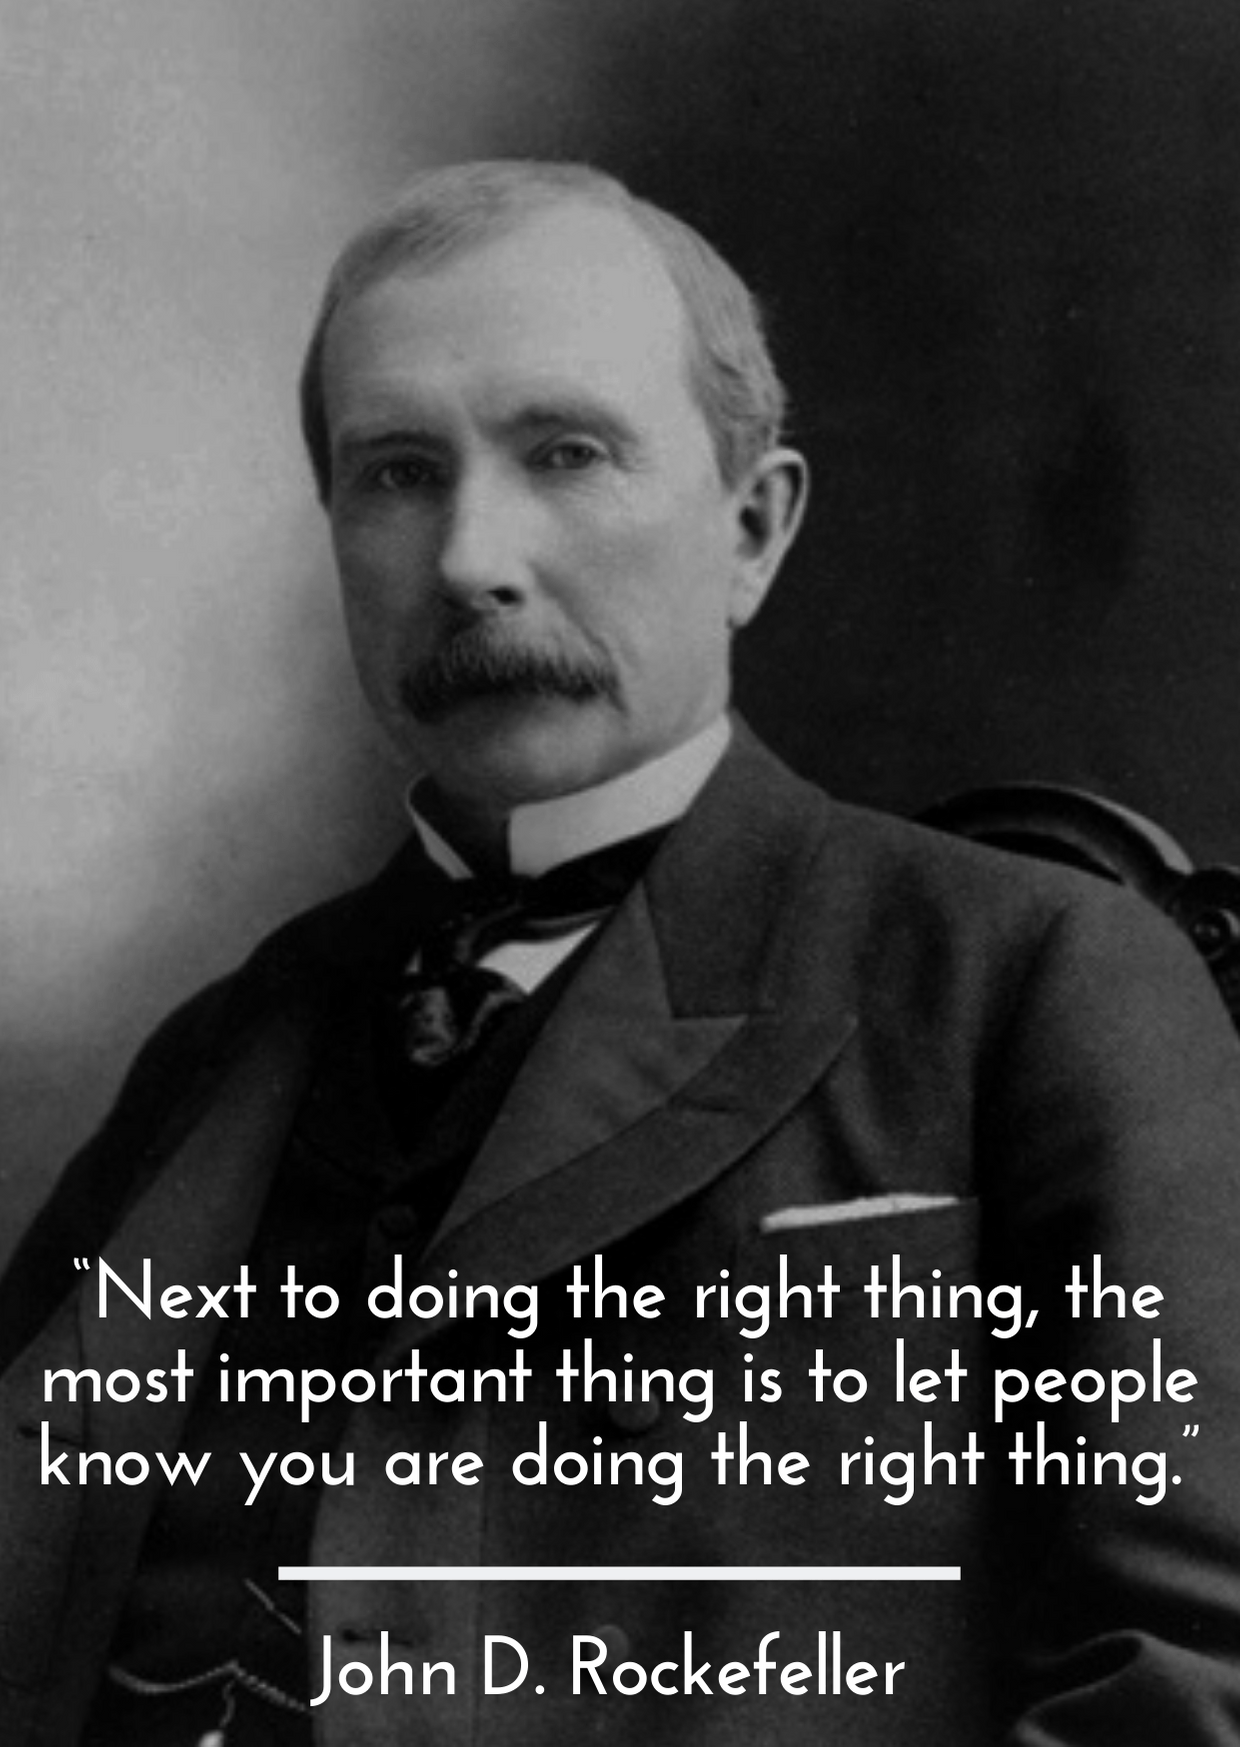 Public Relations Quotes by John D. Rockefeller